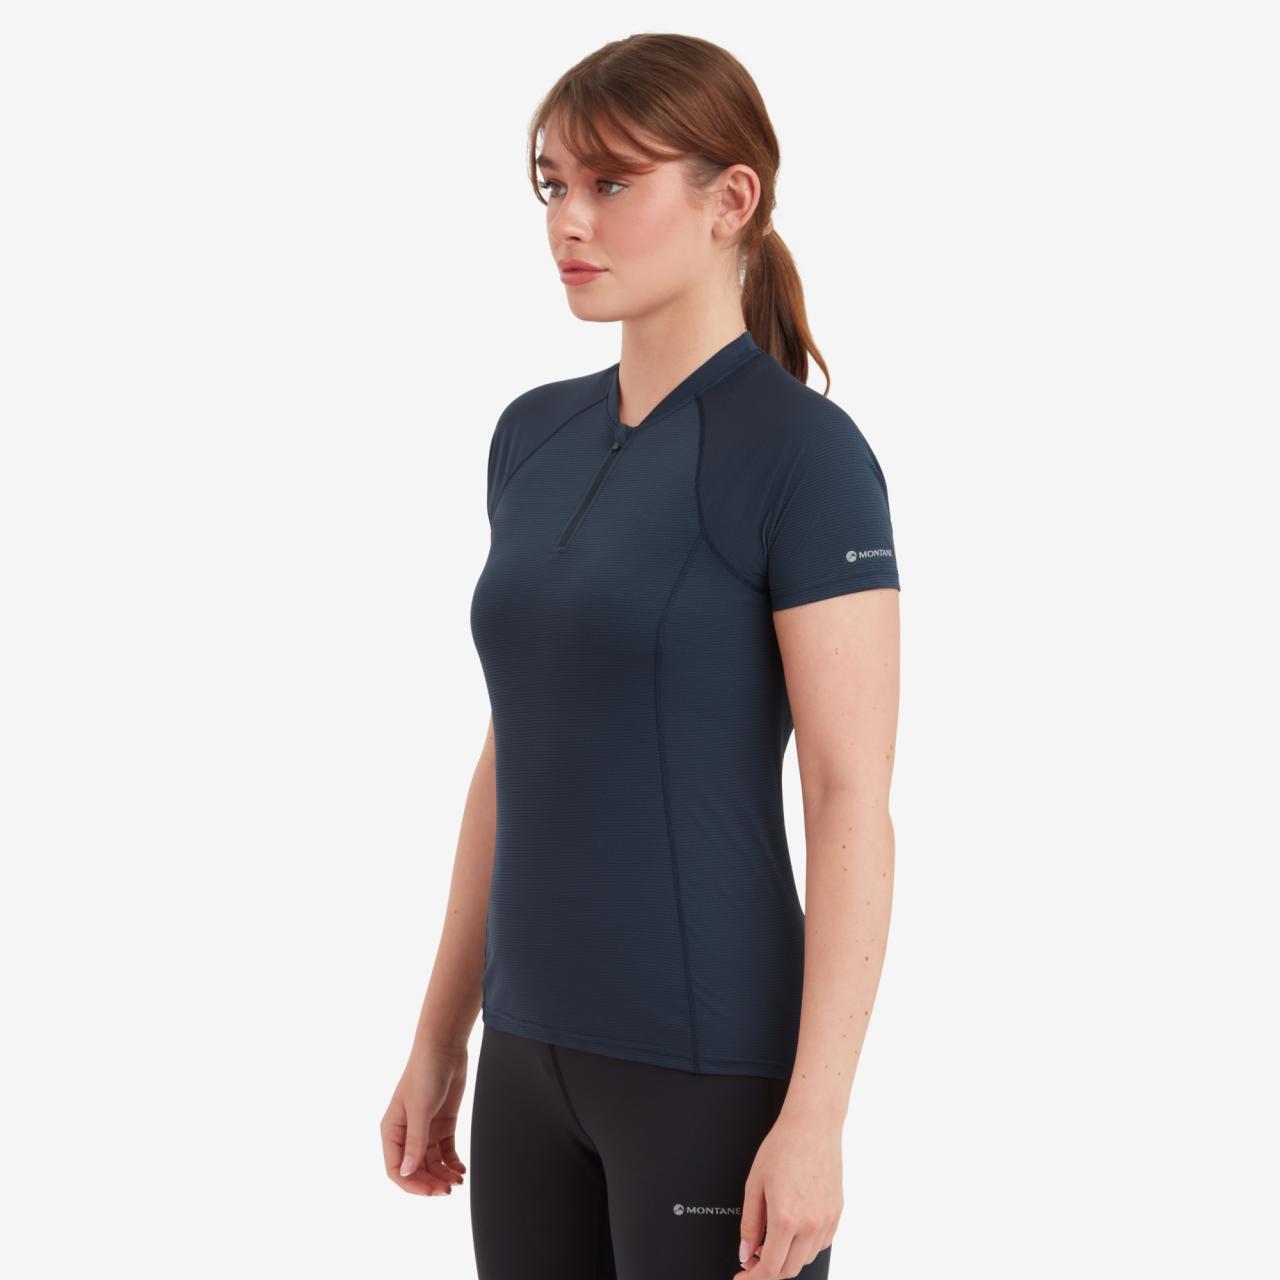 FEM DART NANO ZIP T-SHIRT-ECLIPSE BLUE-UK10/S dámské triko modré